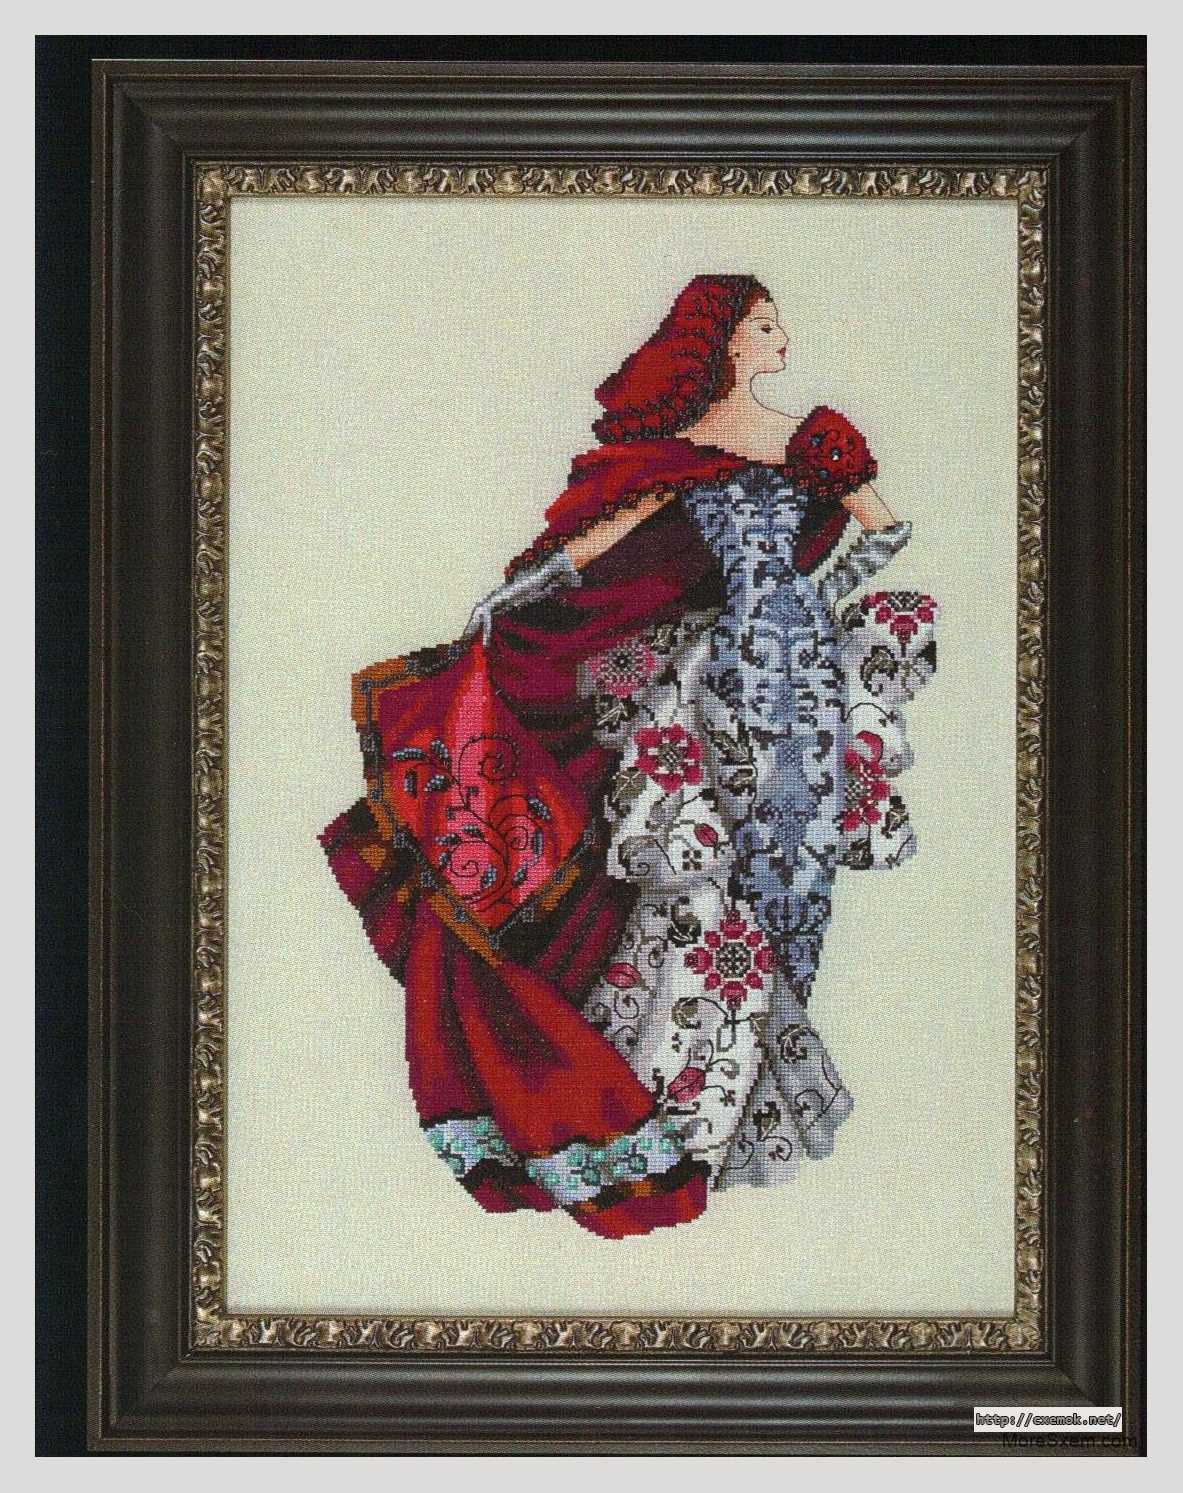 Download embroidery patterns by cross-stitch  - Леди в красном платье